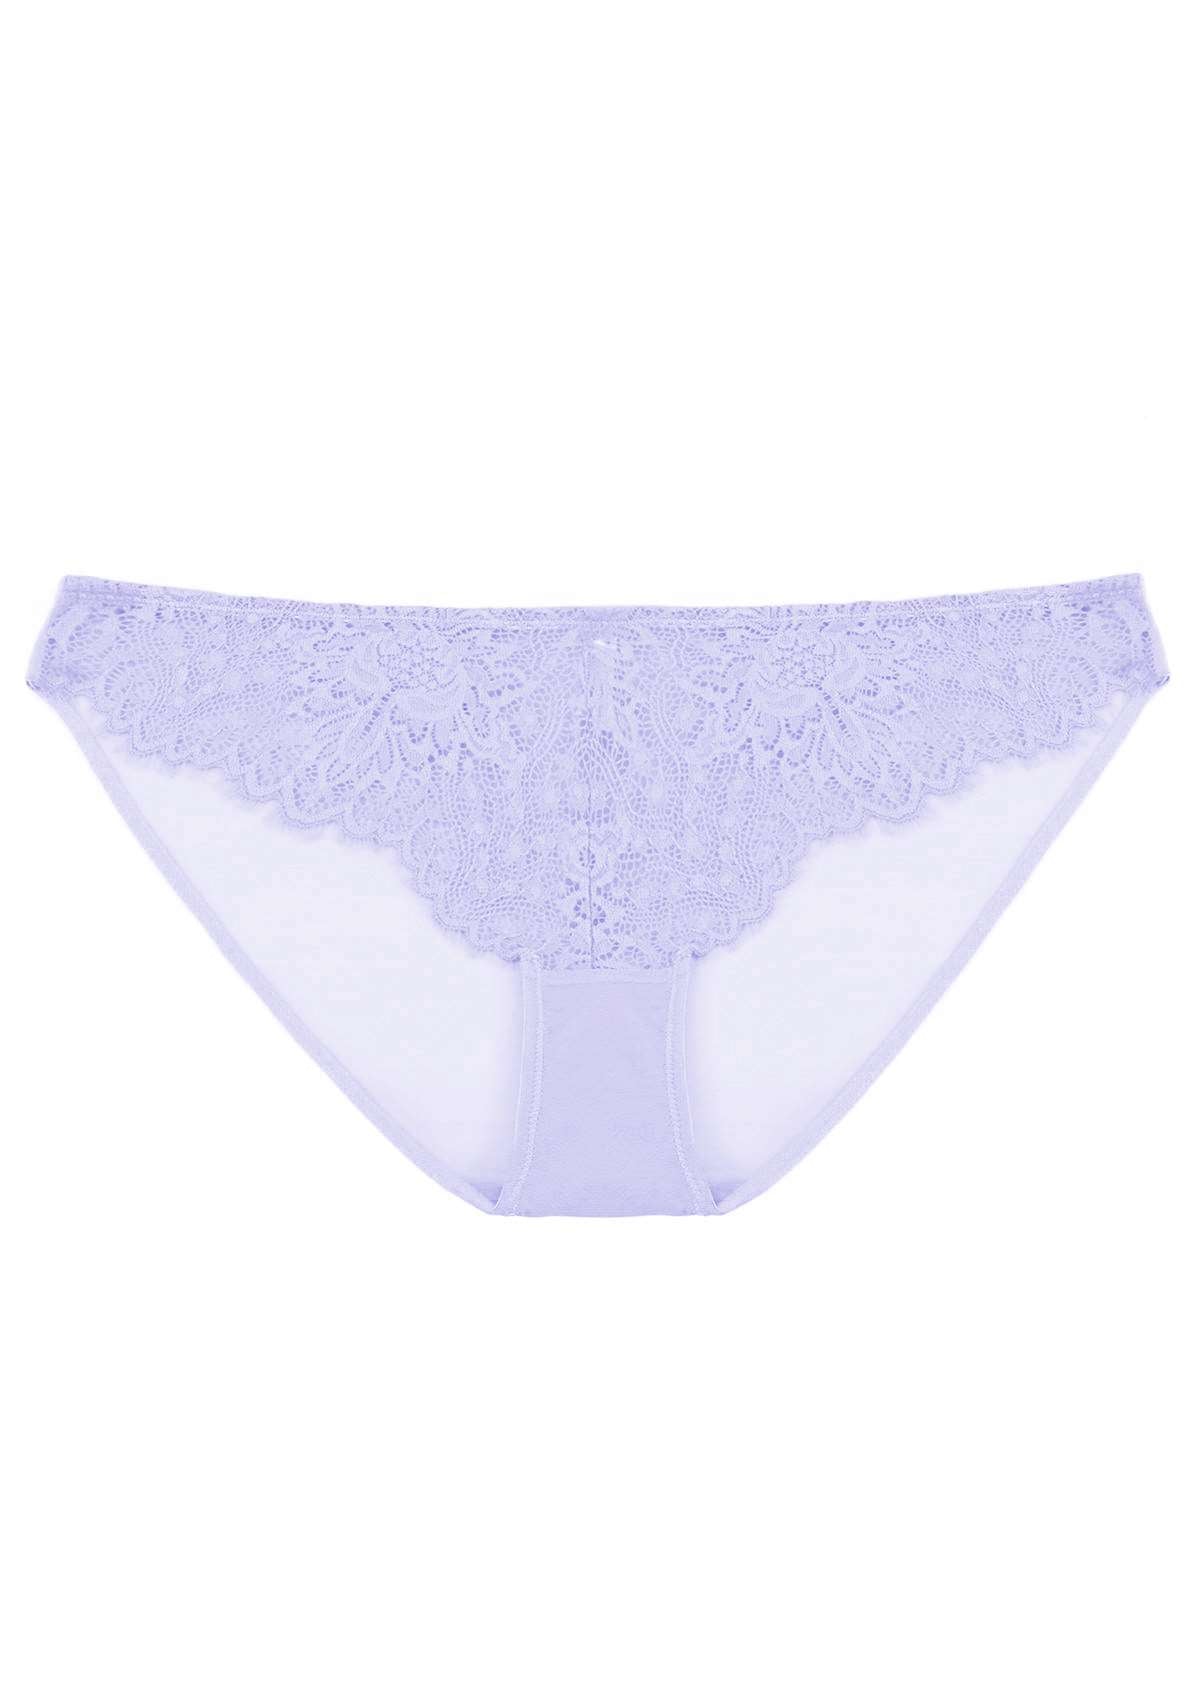 HSIA Sunflower Exquisite Lace Bikini Underwear - XXL / Purple